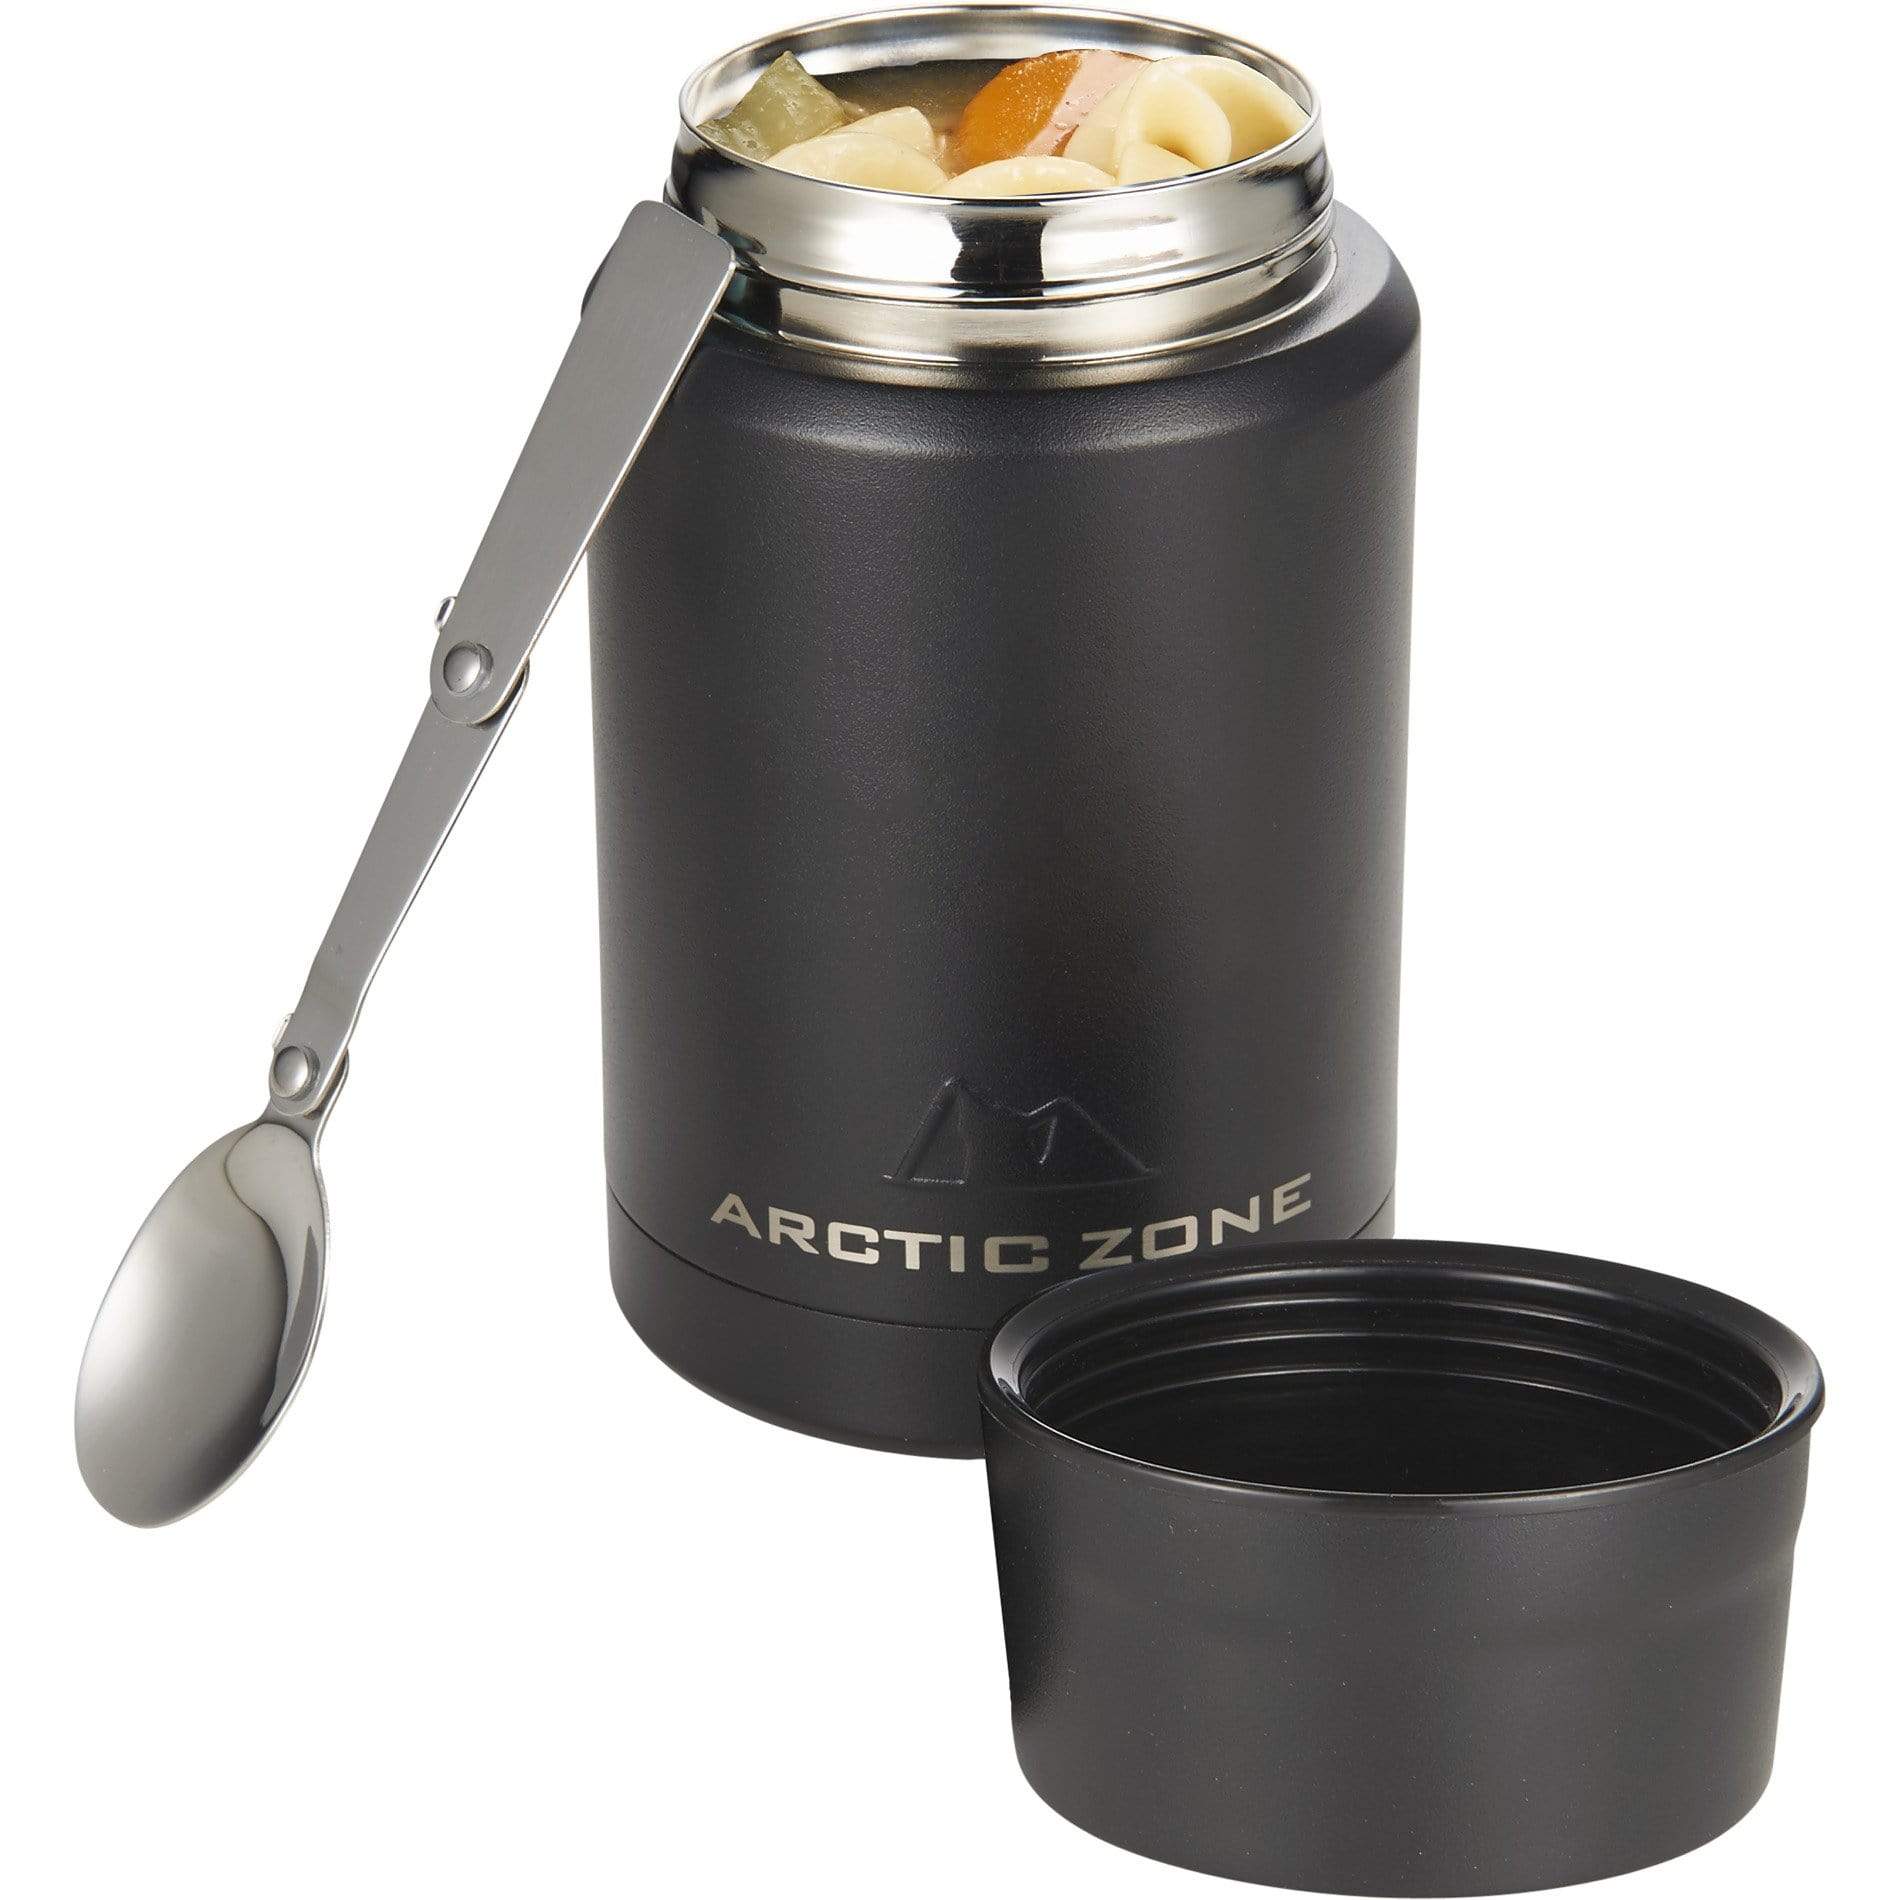 Arctic Zone - Titan Copper Insulated Food Storage